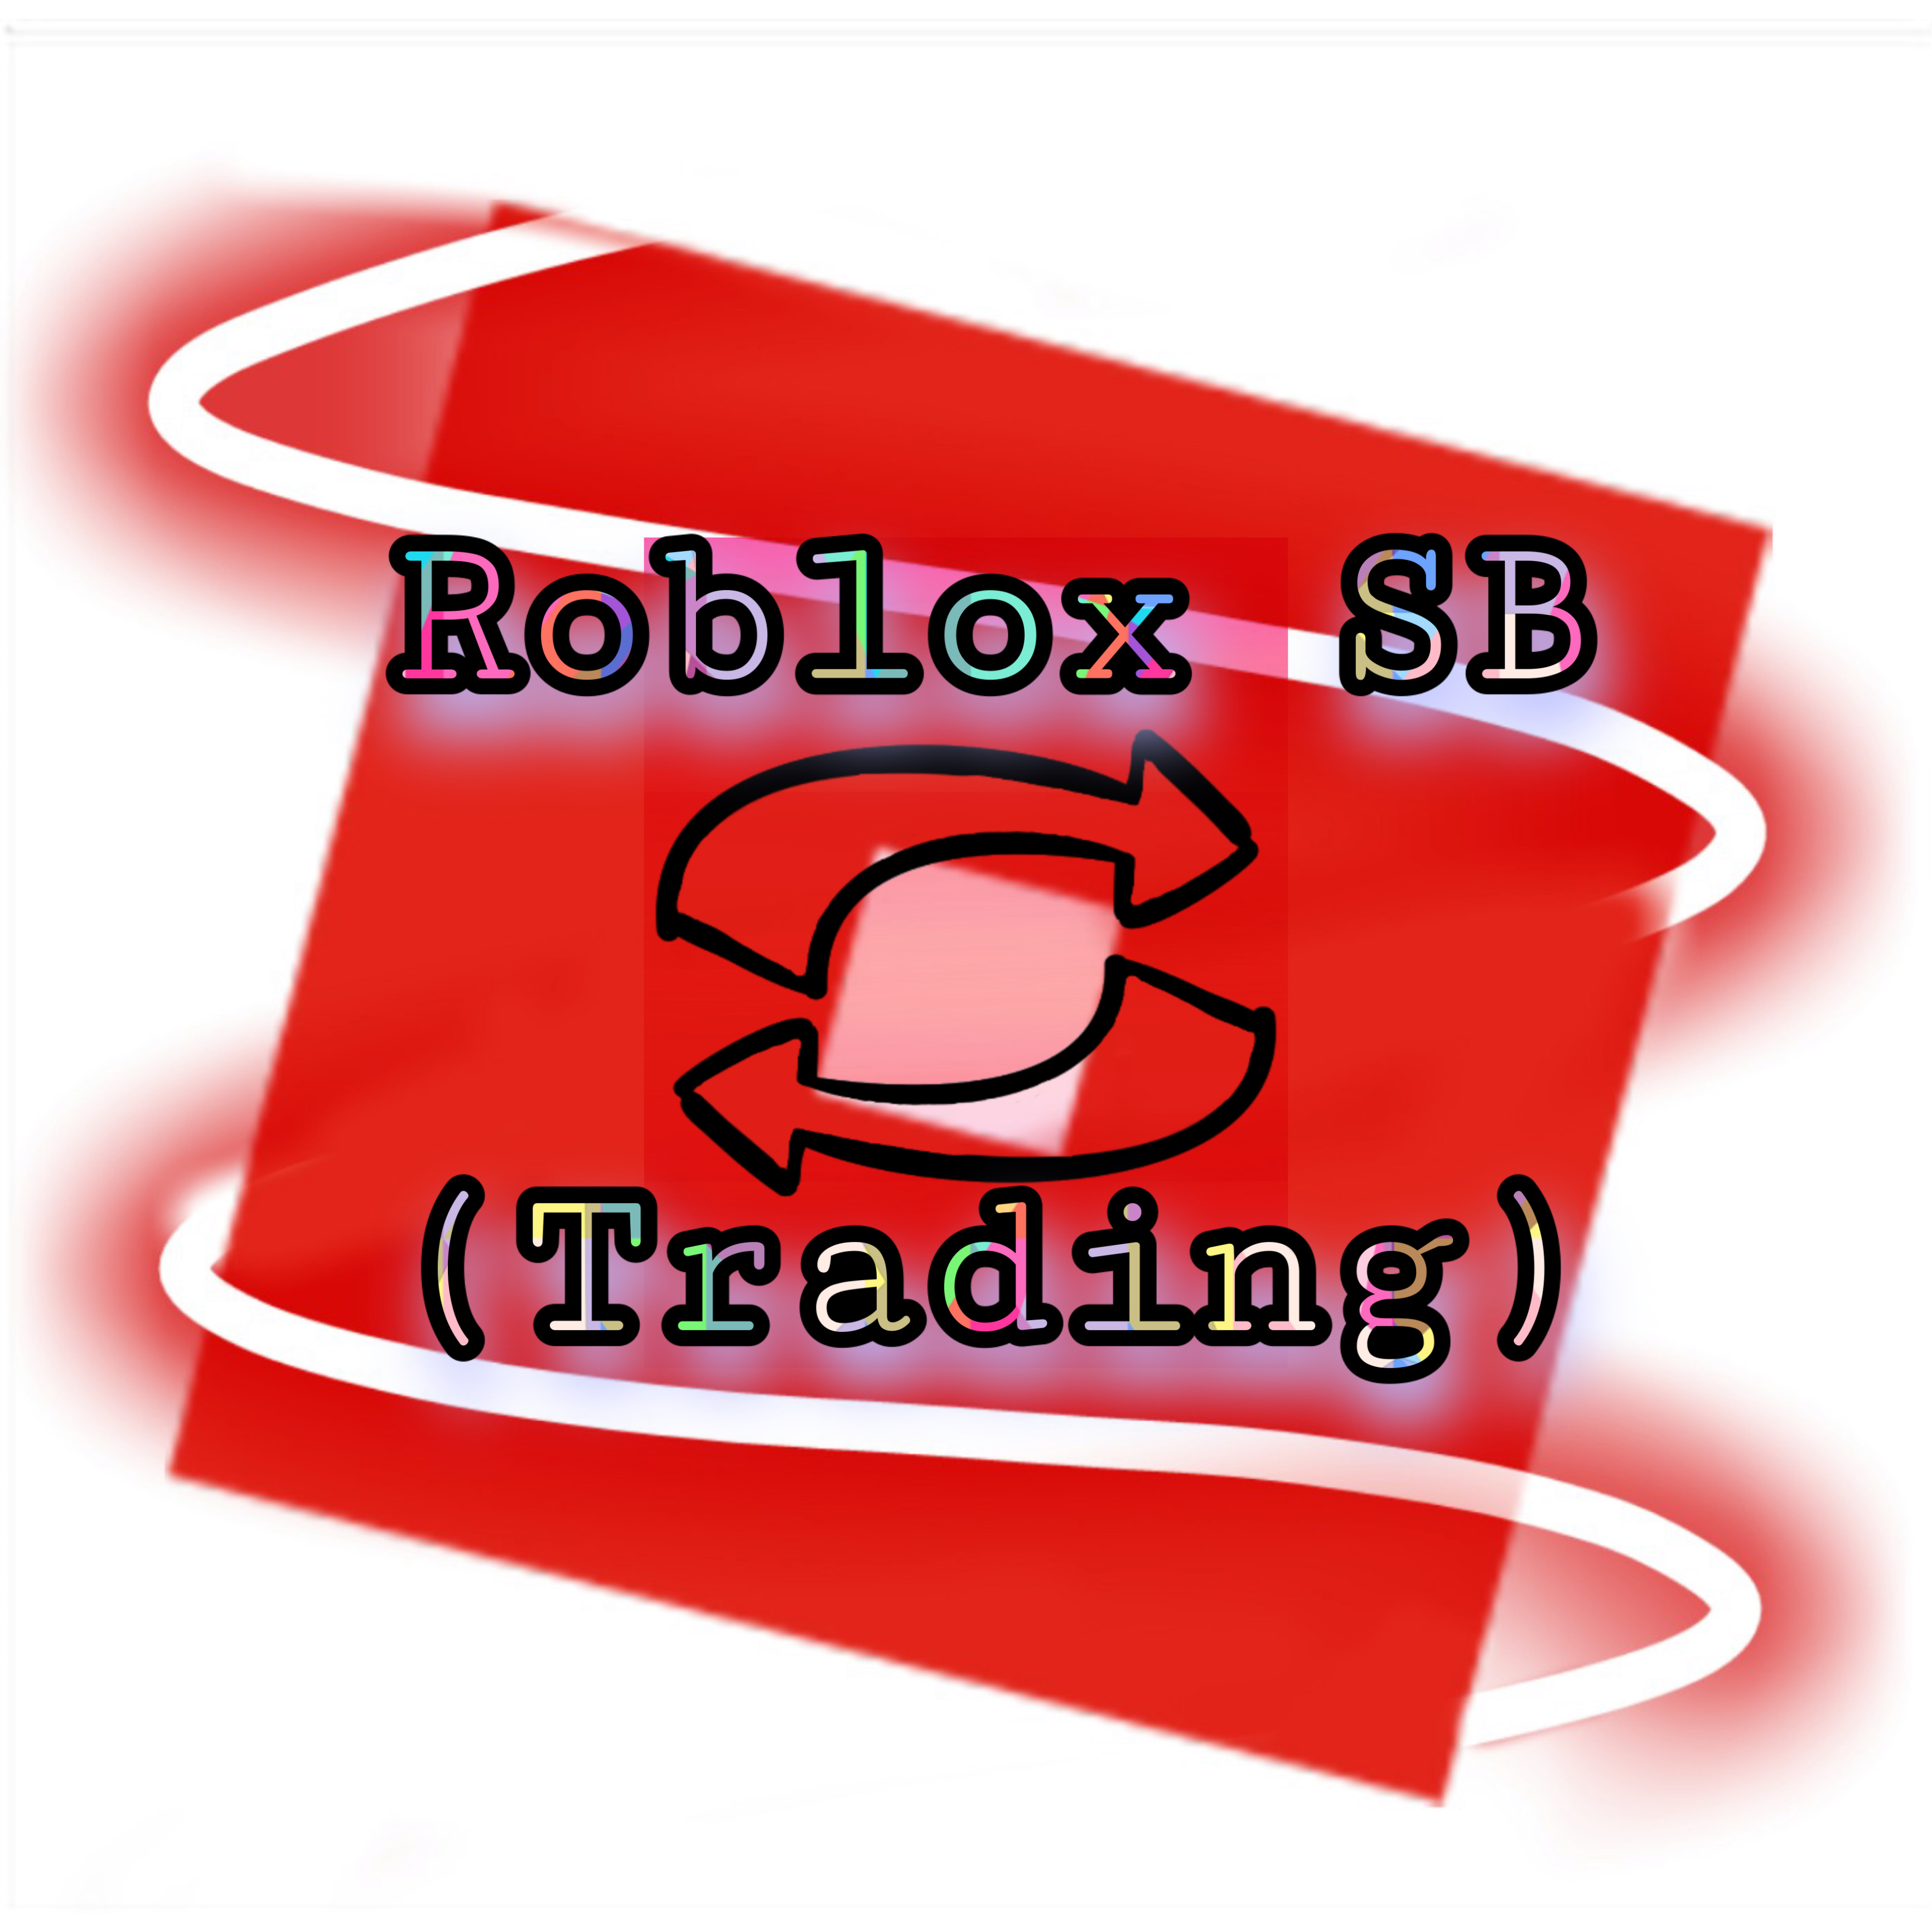 Roblox Skyblock Trading Values